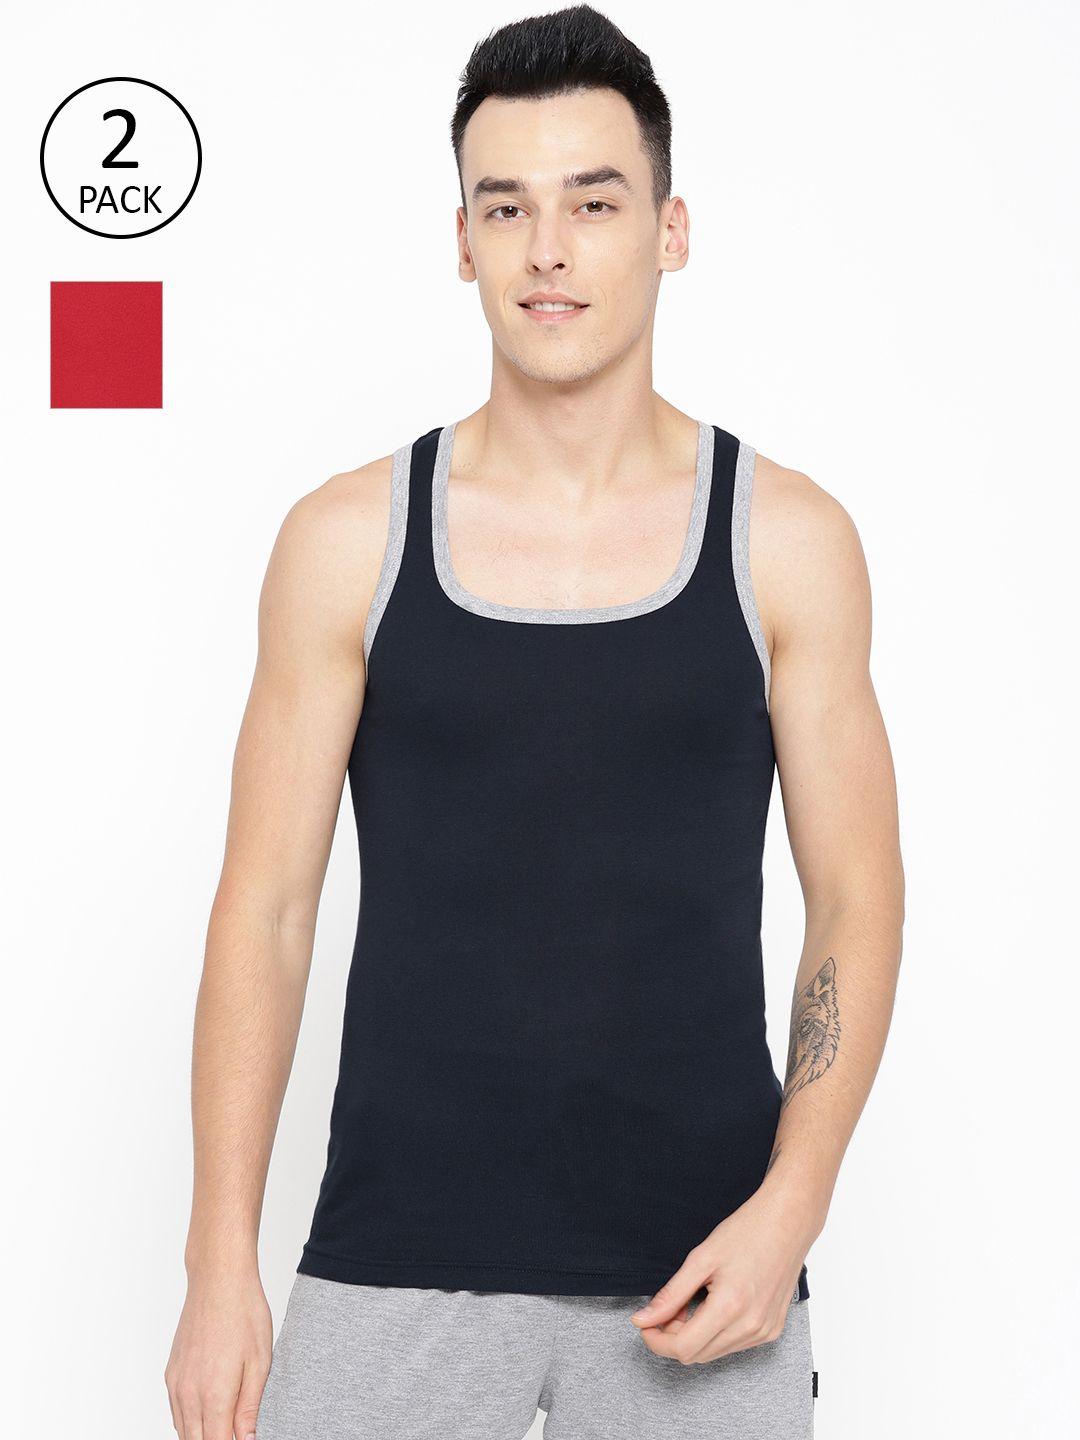 one8-by-virat-kohli-men-pack-of-2-solid-innerwear-vests-10486246-1-10486270-1